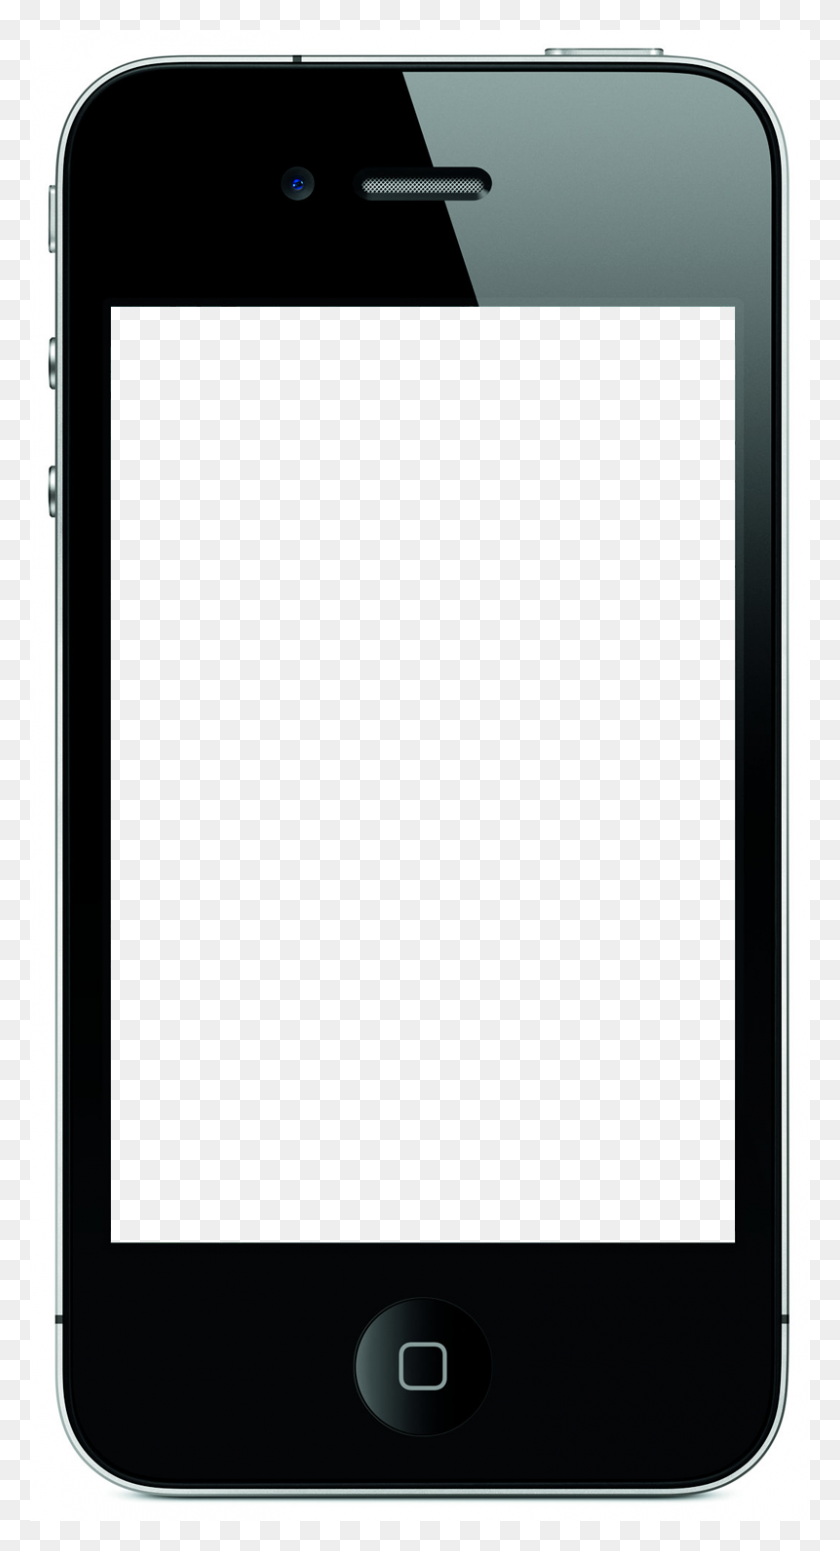 800x1530 Iphone Png Transparente - Ipad Png Transparente